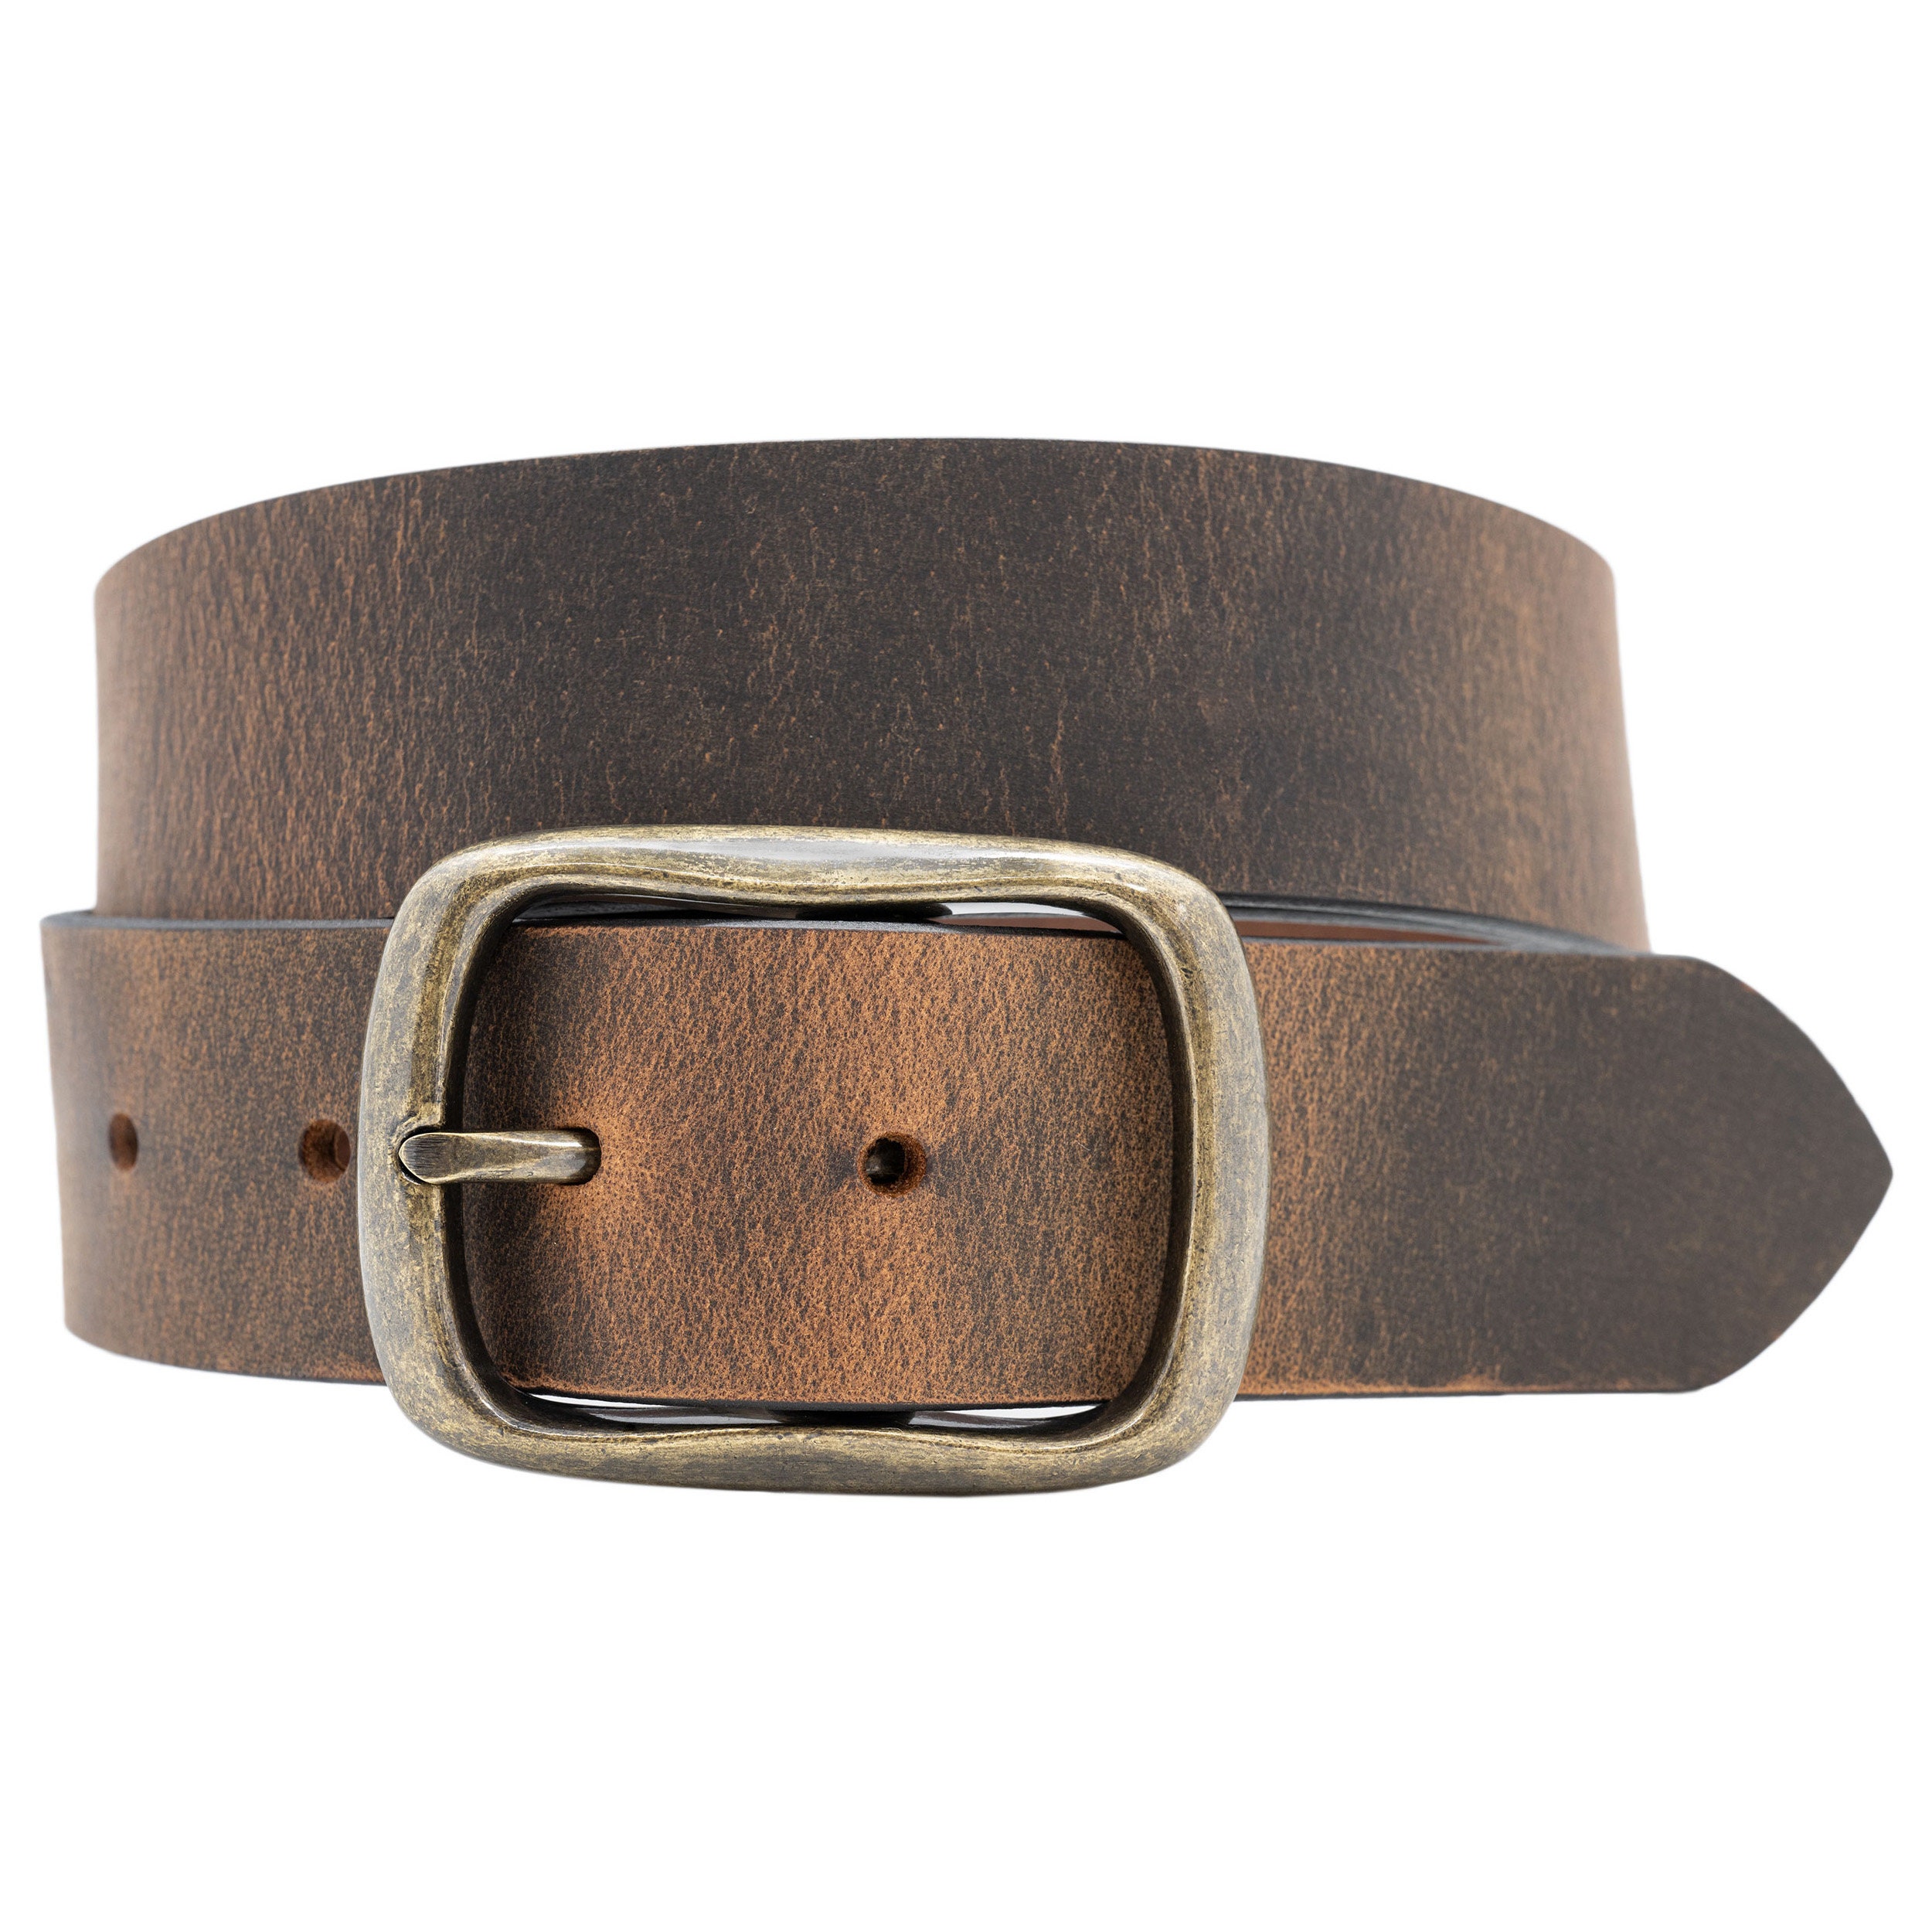 Handmade Leather Belt Medium 30-35 Tan